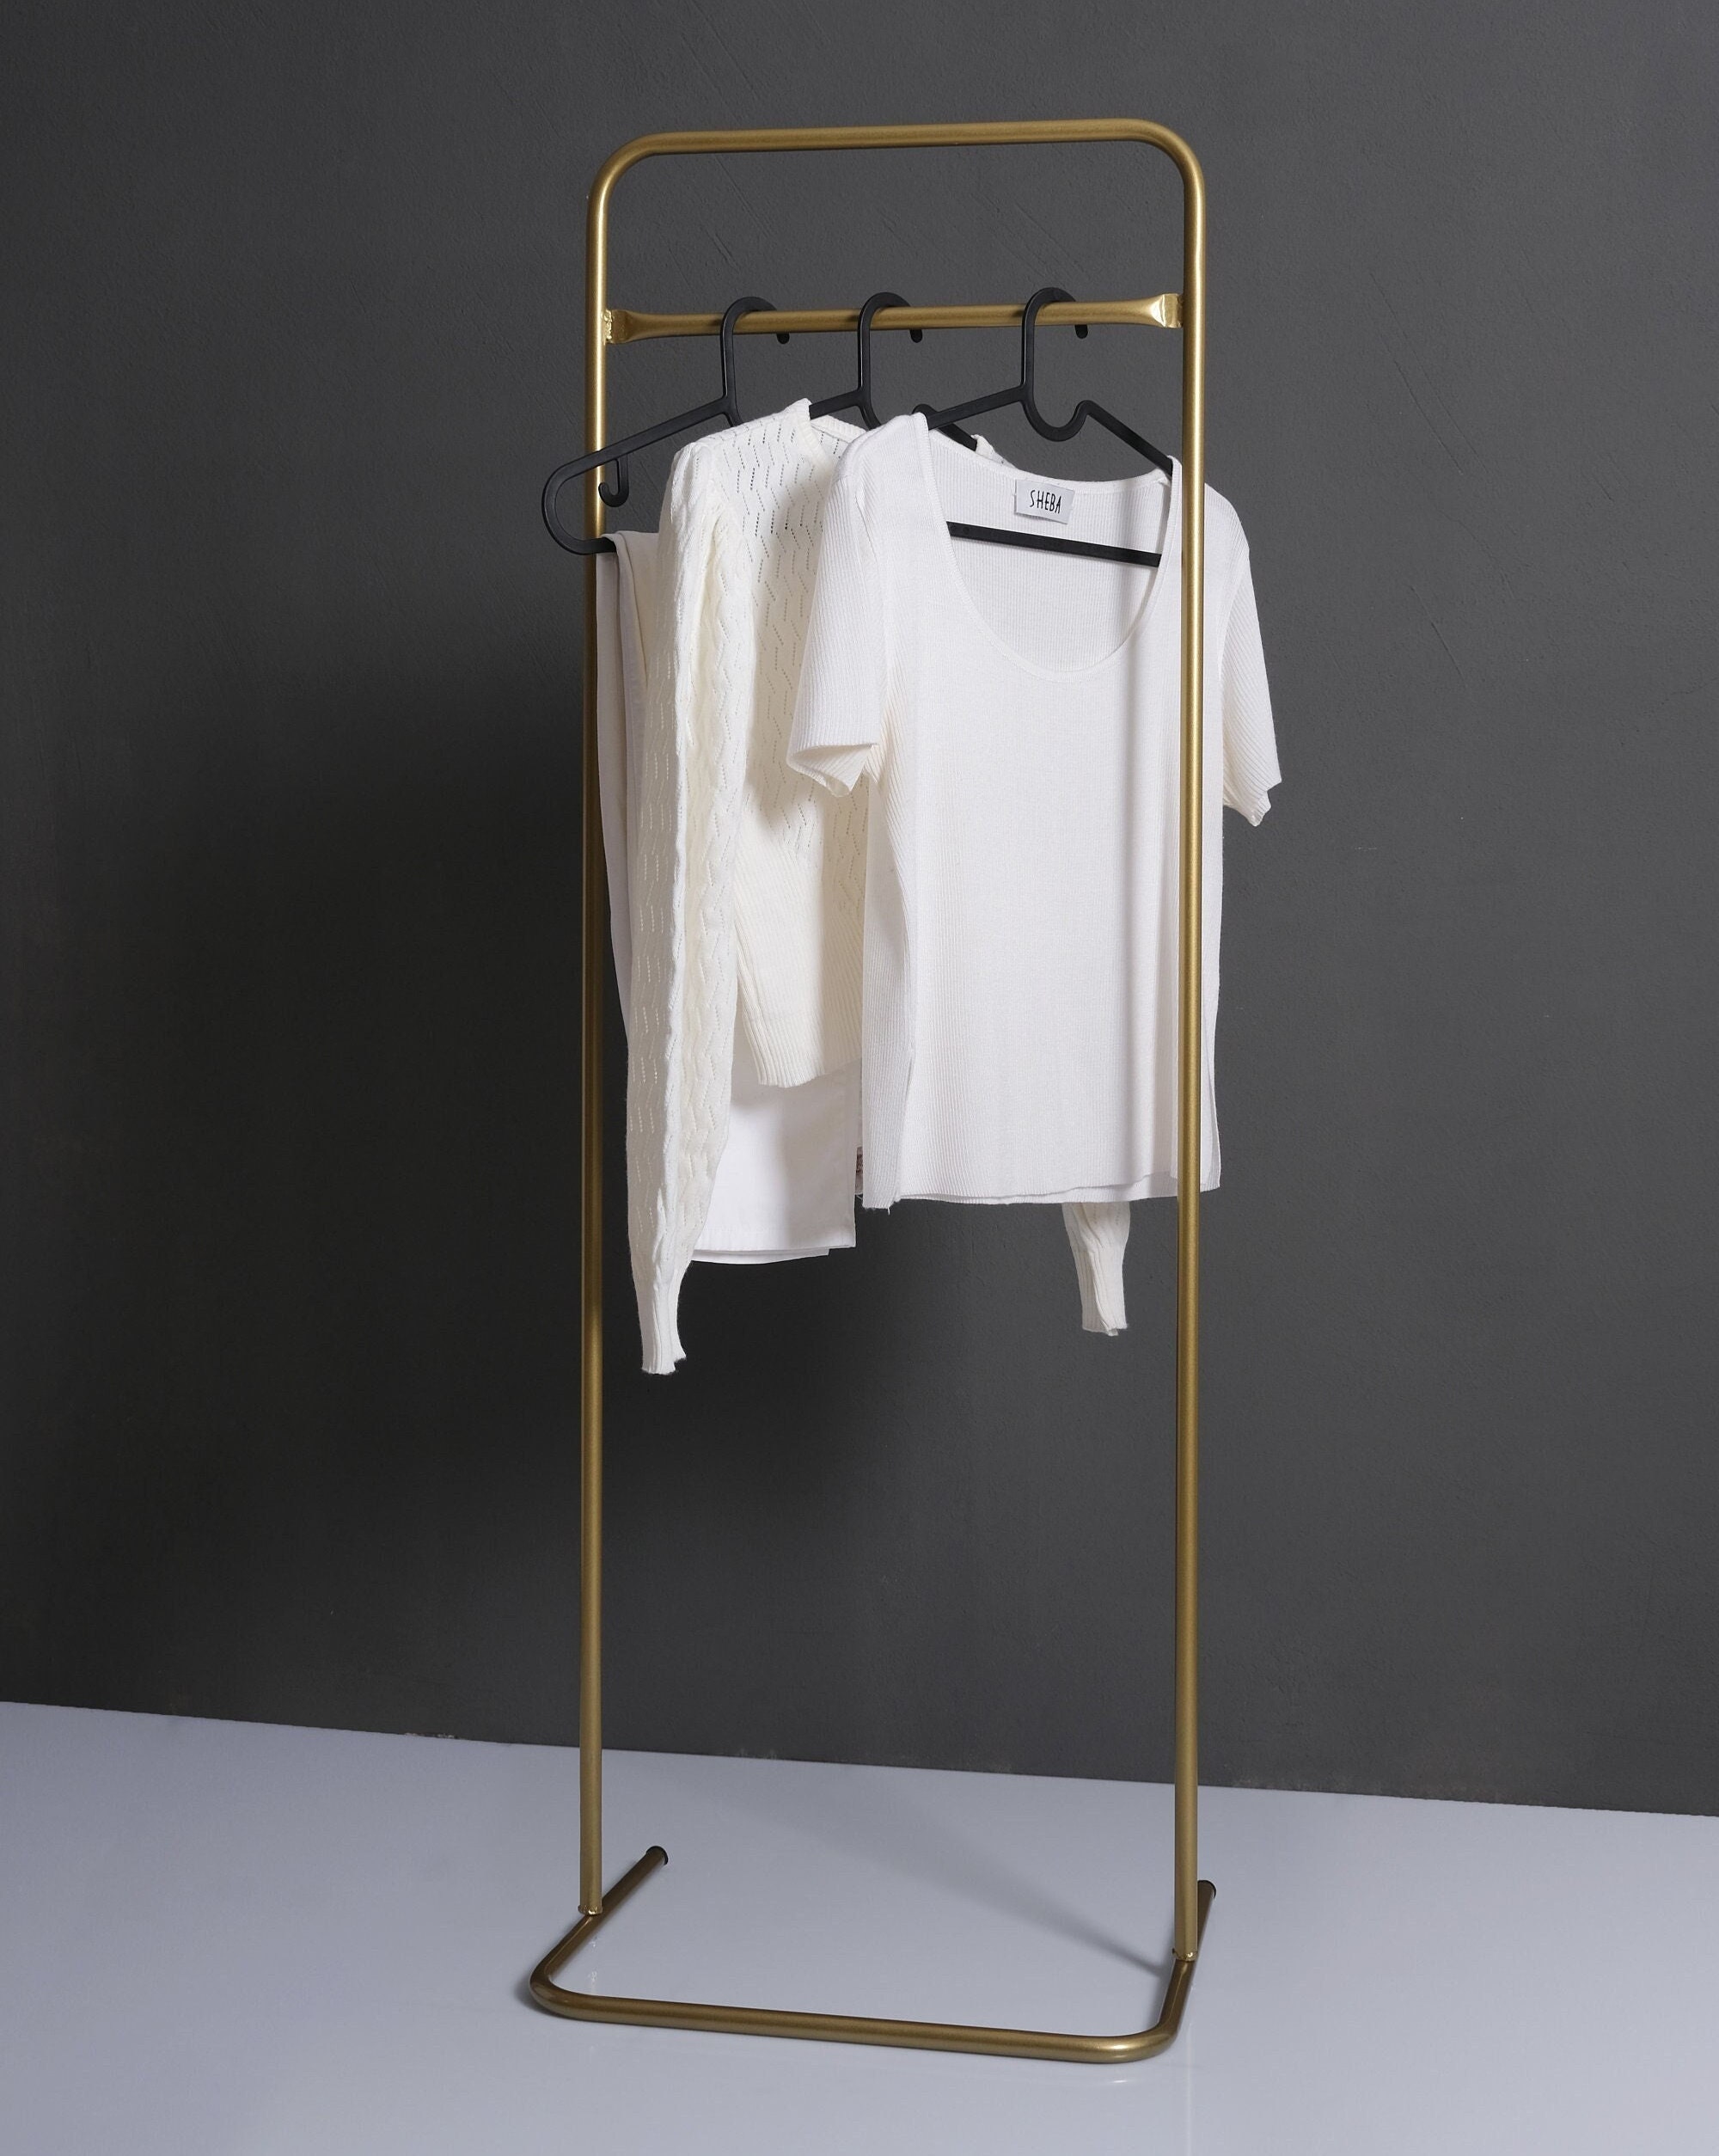 VEGAINDOOR Garment Rack Gold Clothes Rack Metal Clothes - Etsy